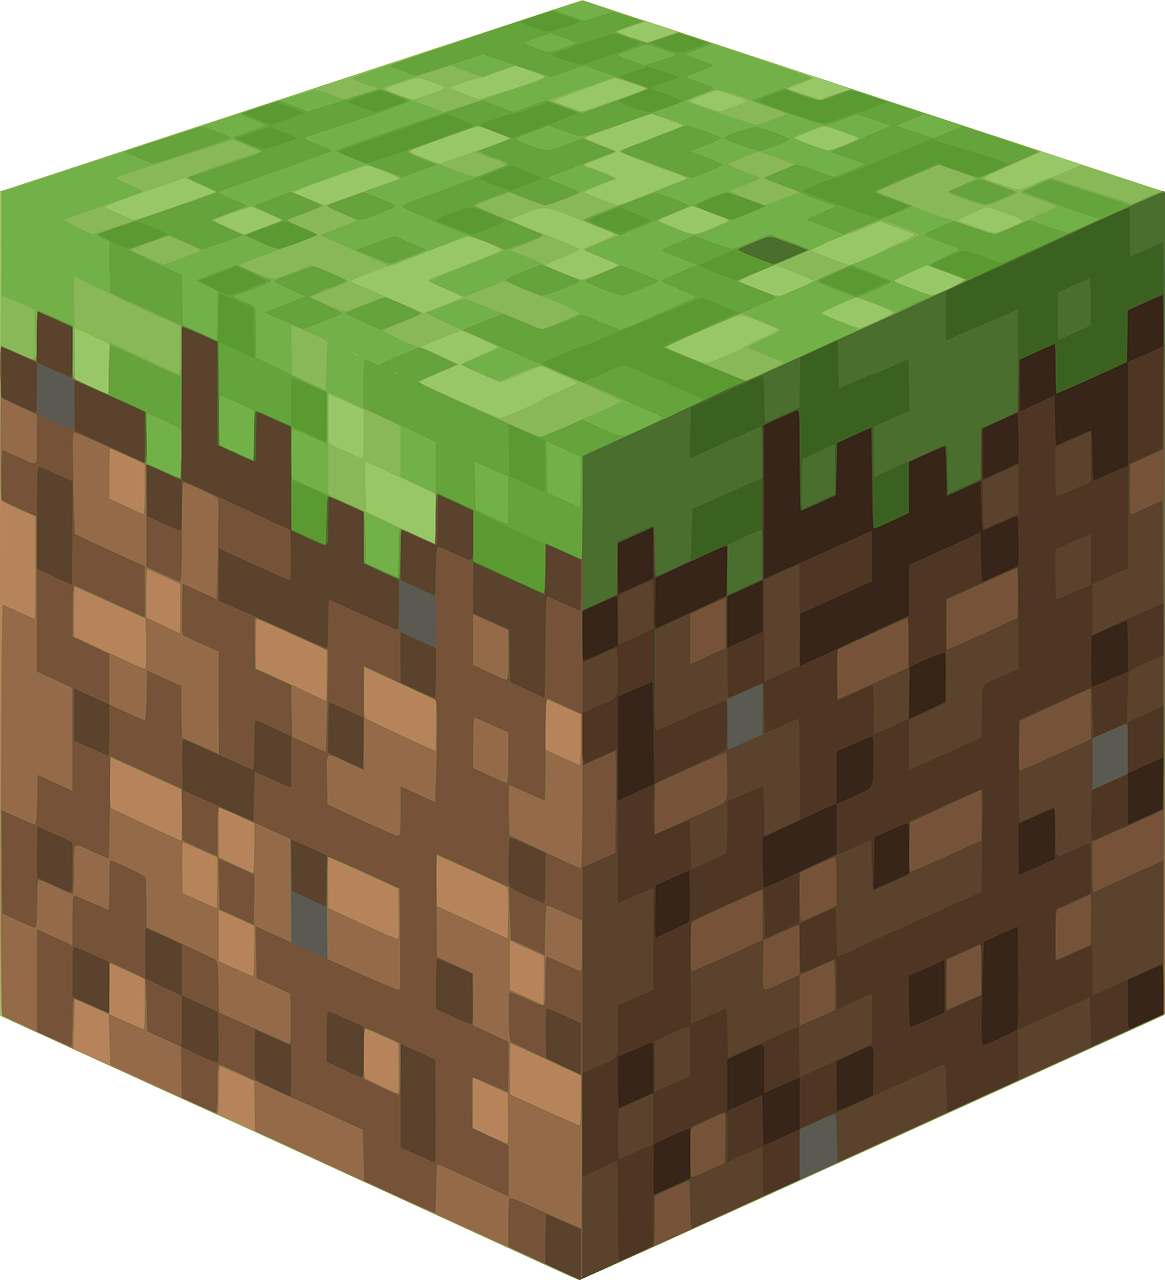 Block of Minecraft grass